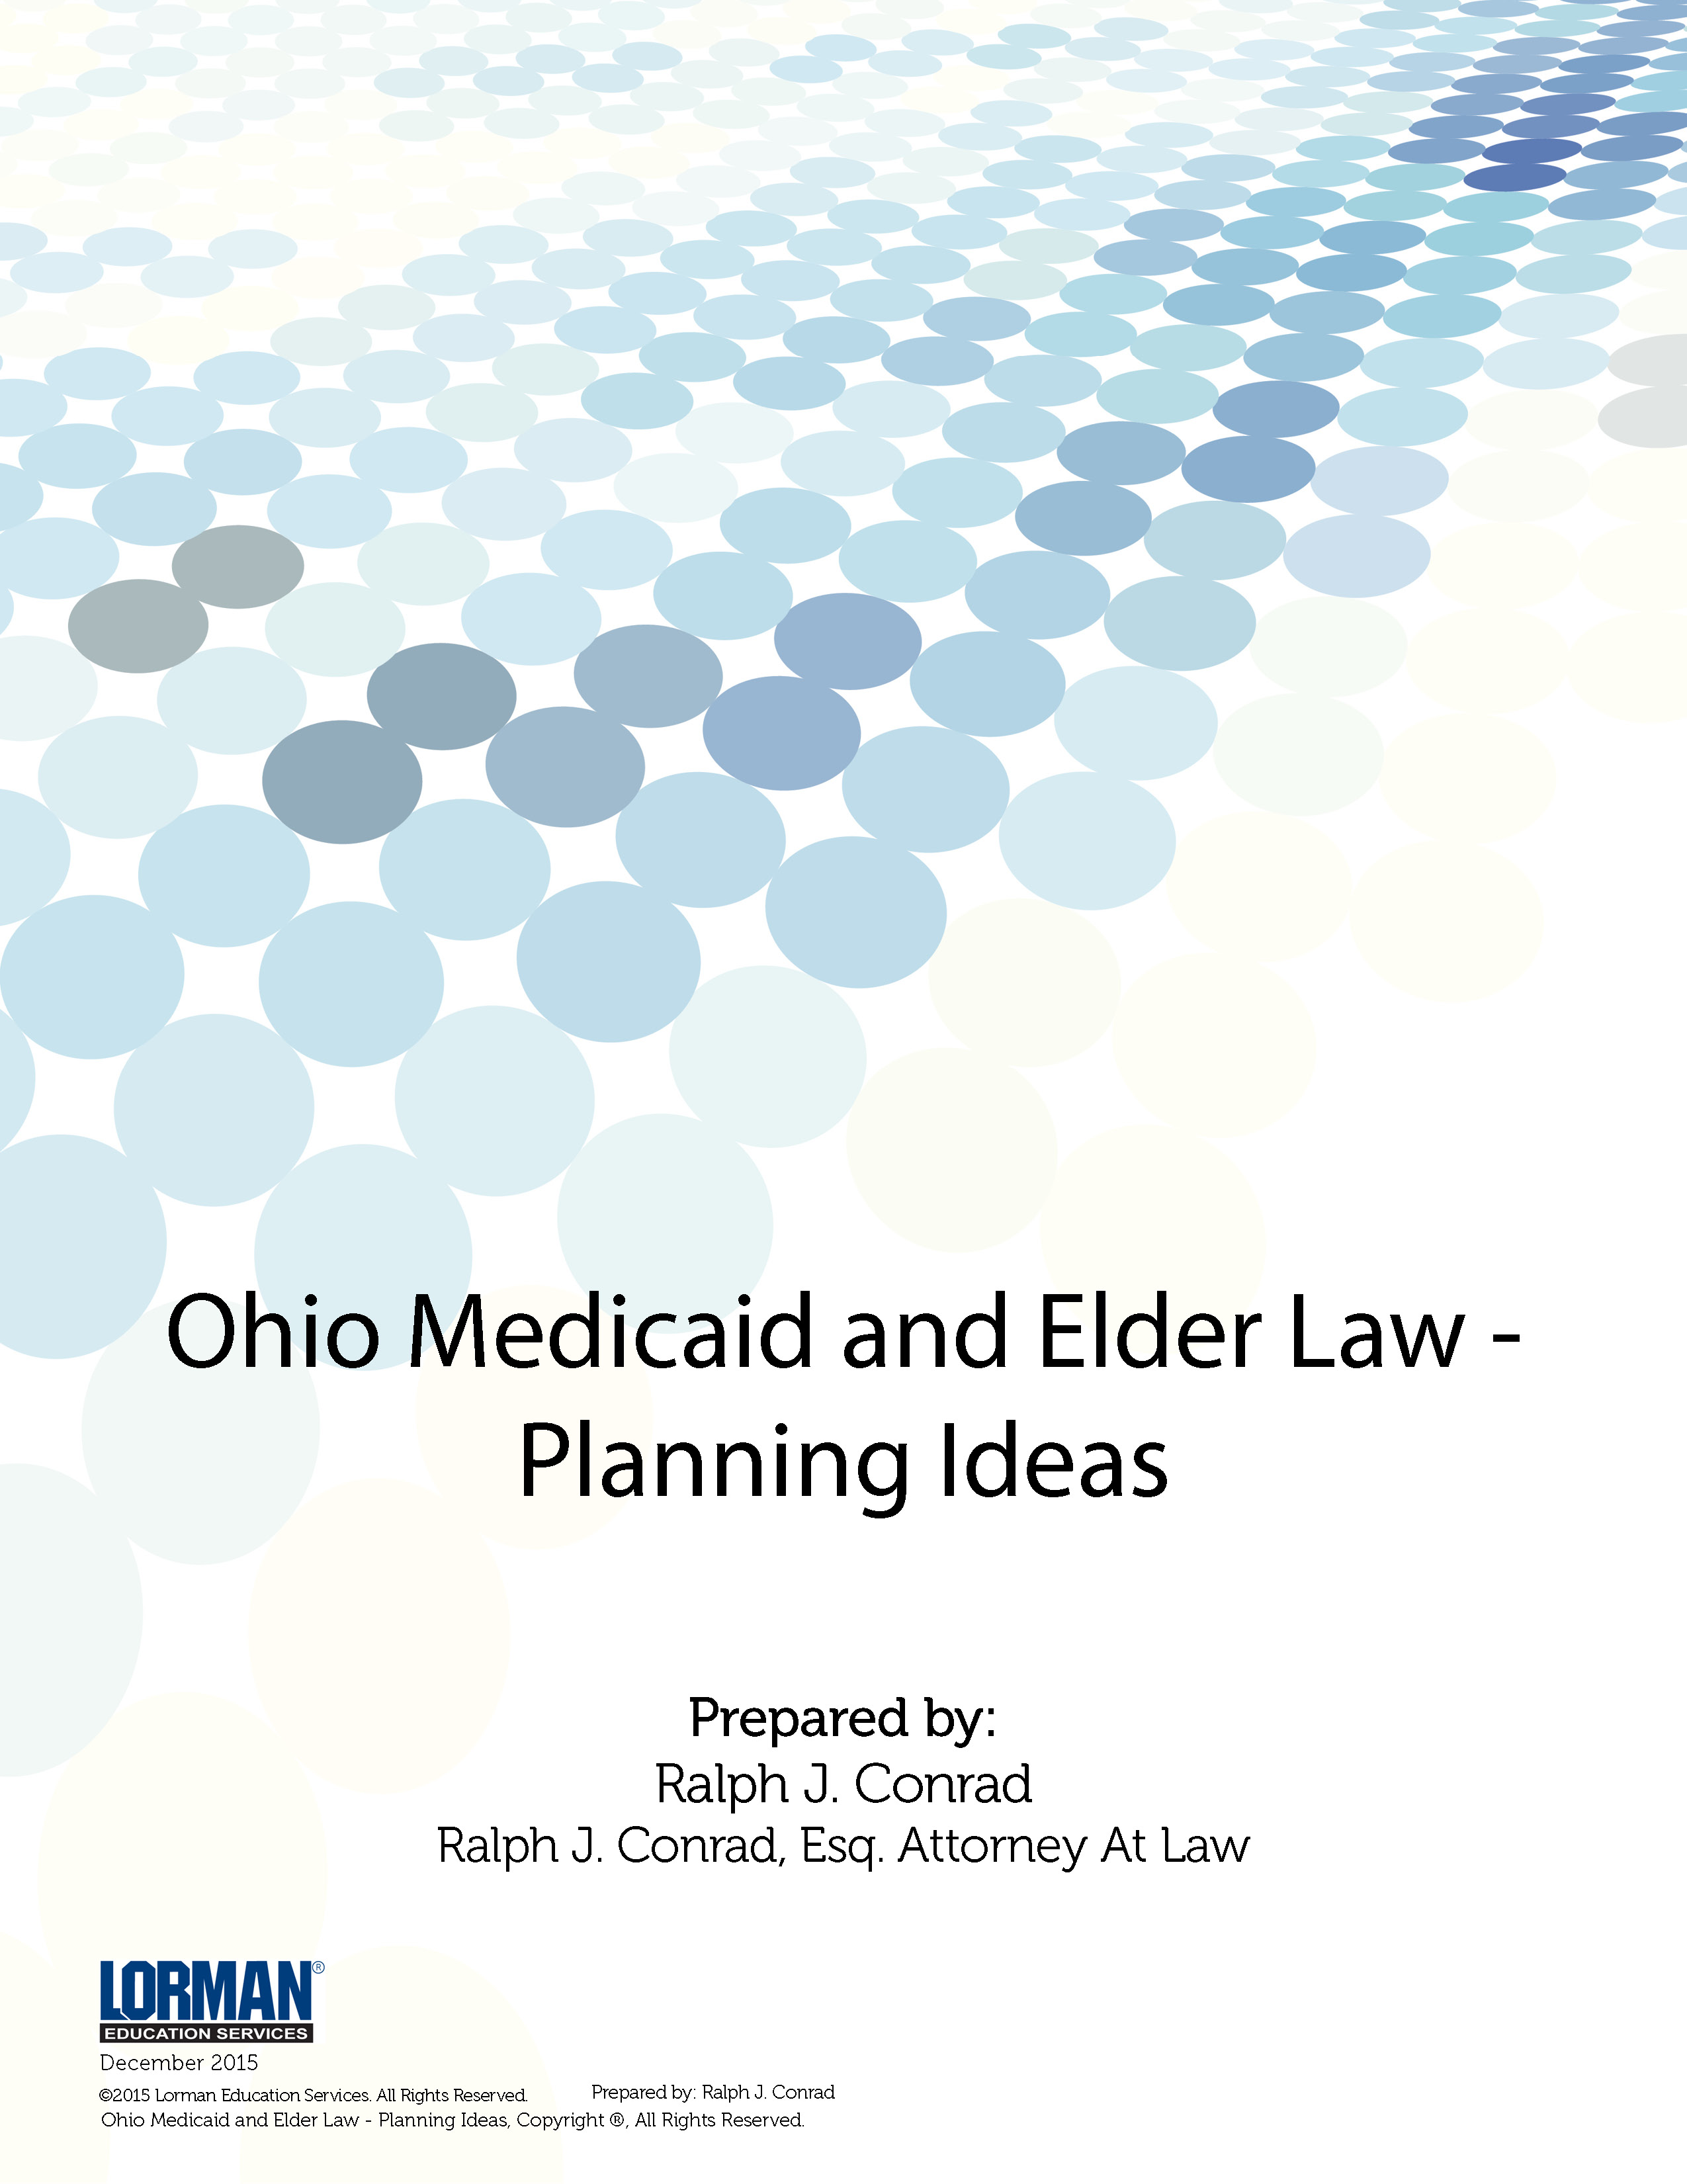 Ohio Medicaid and Elder Law - Planning Ideas